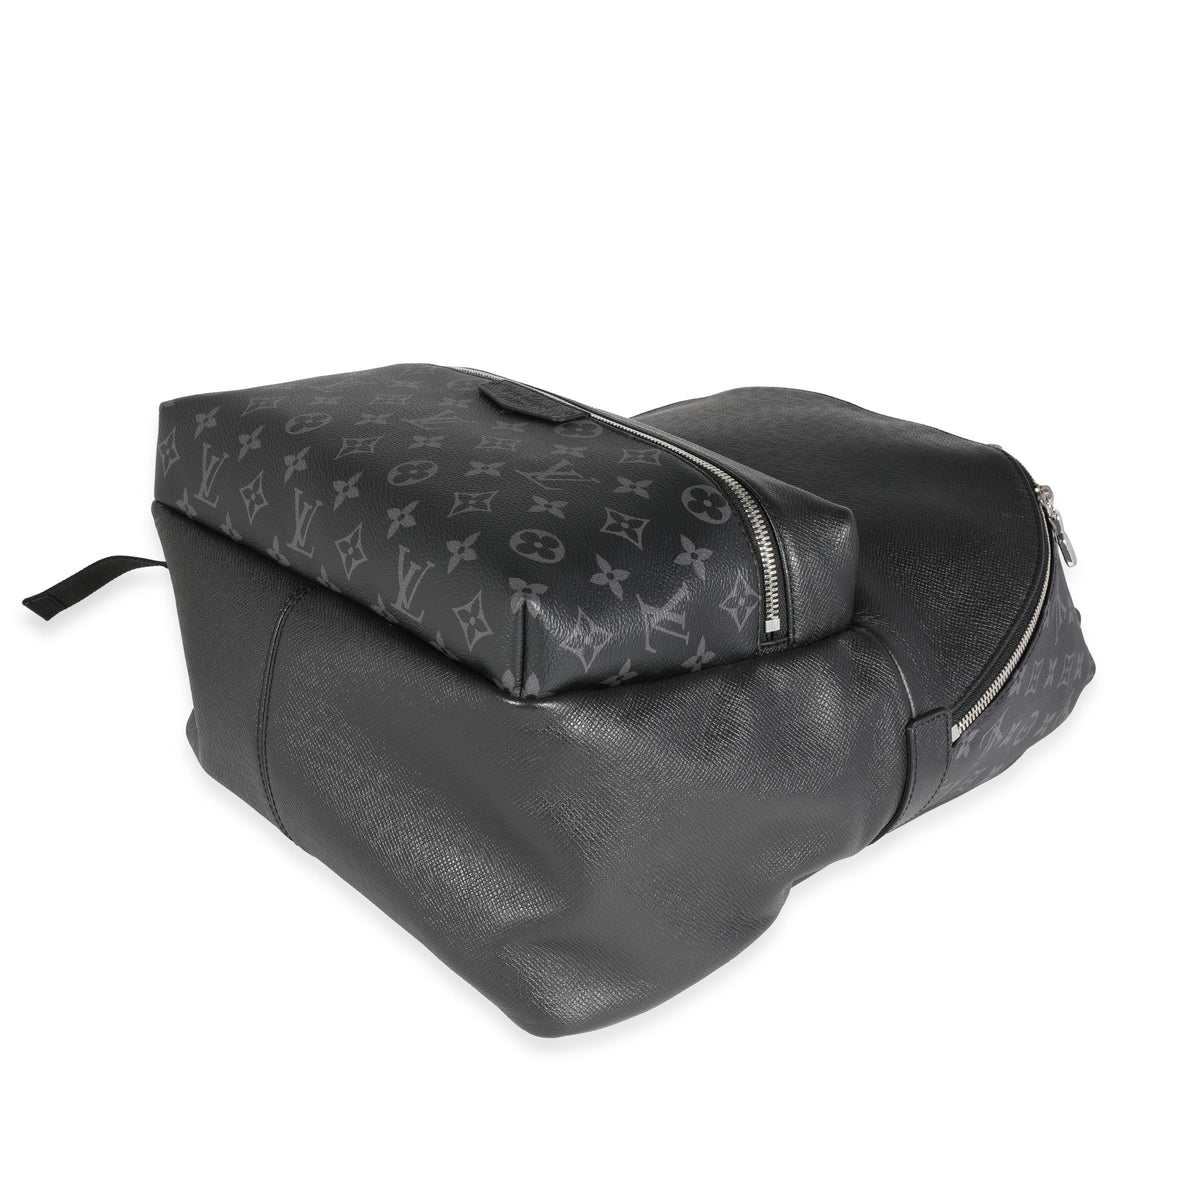 LOUIS VUITTON Backpack Daypack M30209 Grigori Backpack Taiga black